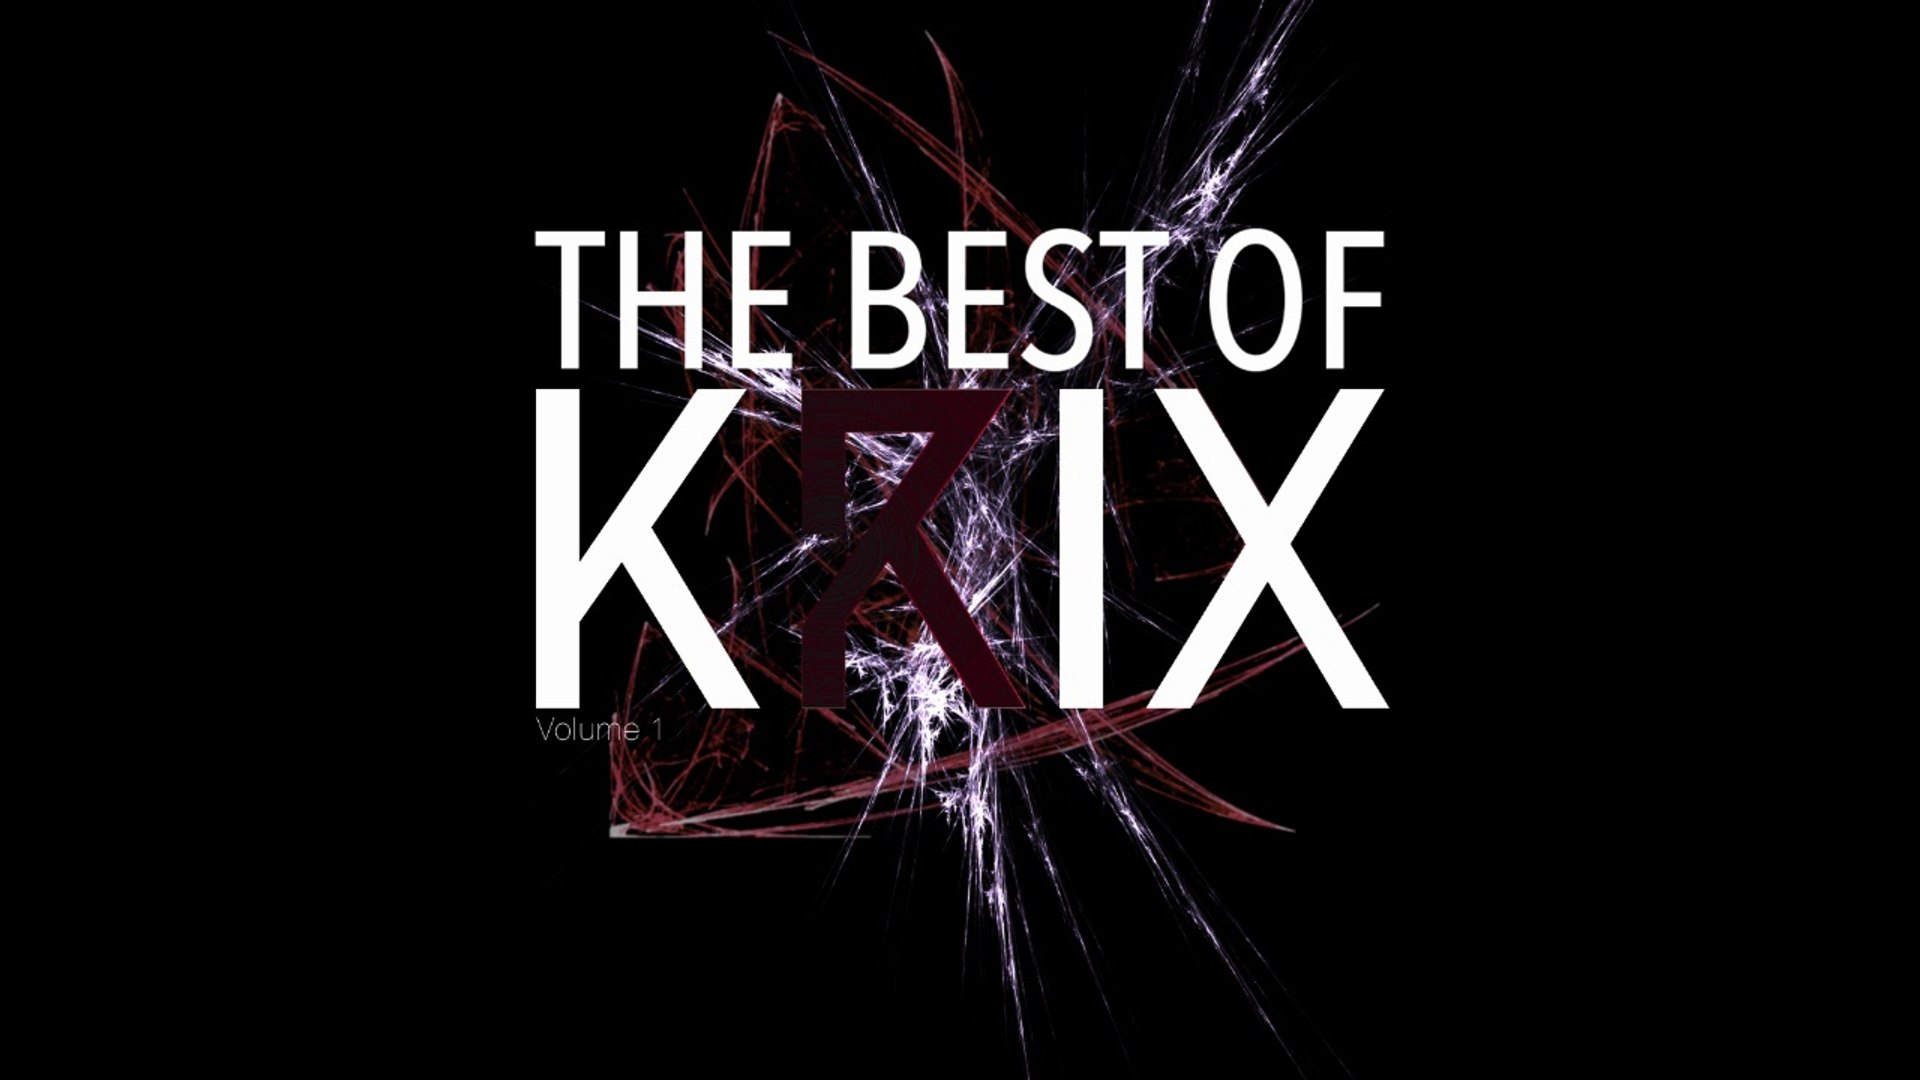 Best of Krix album trailer